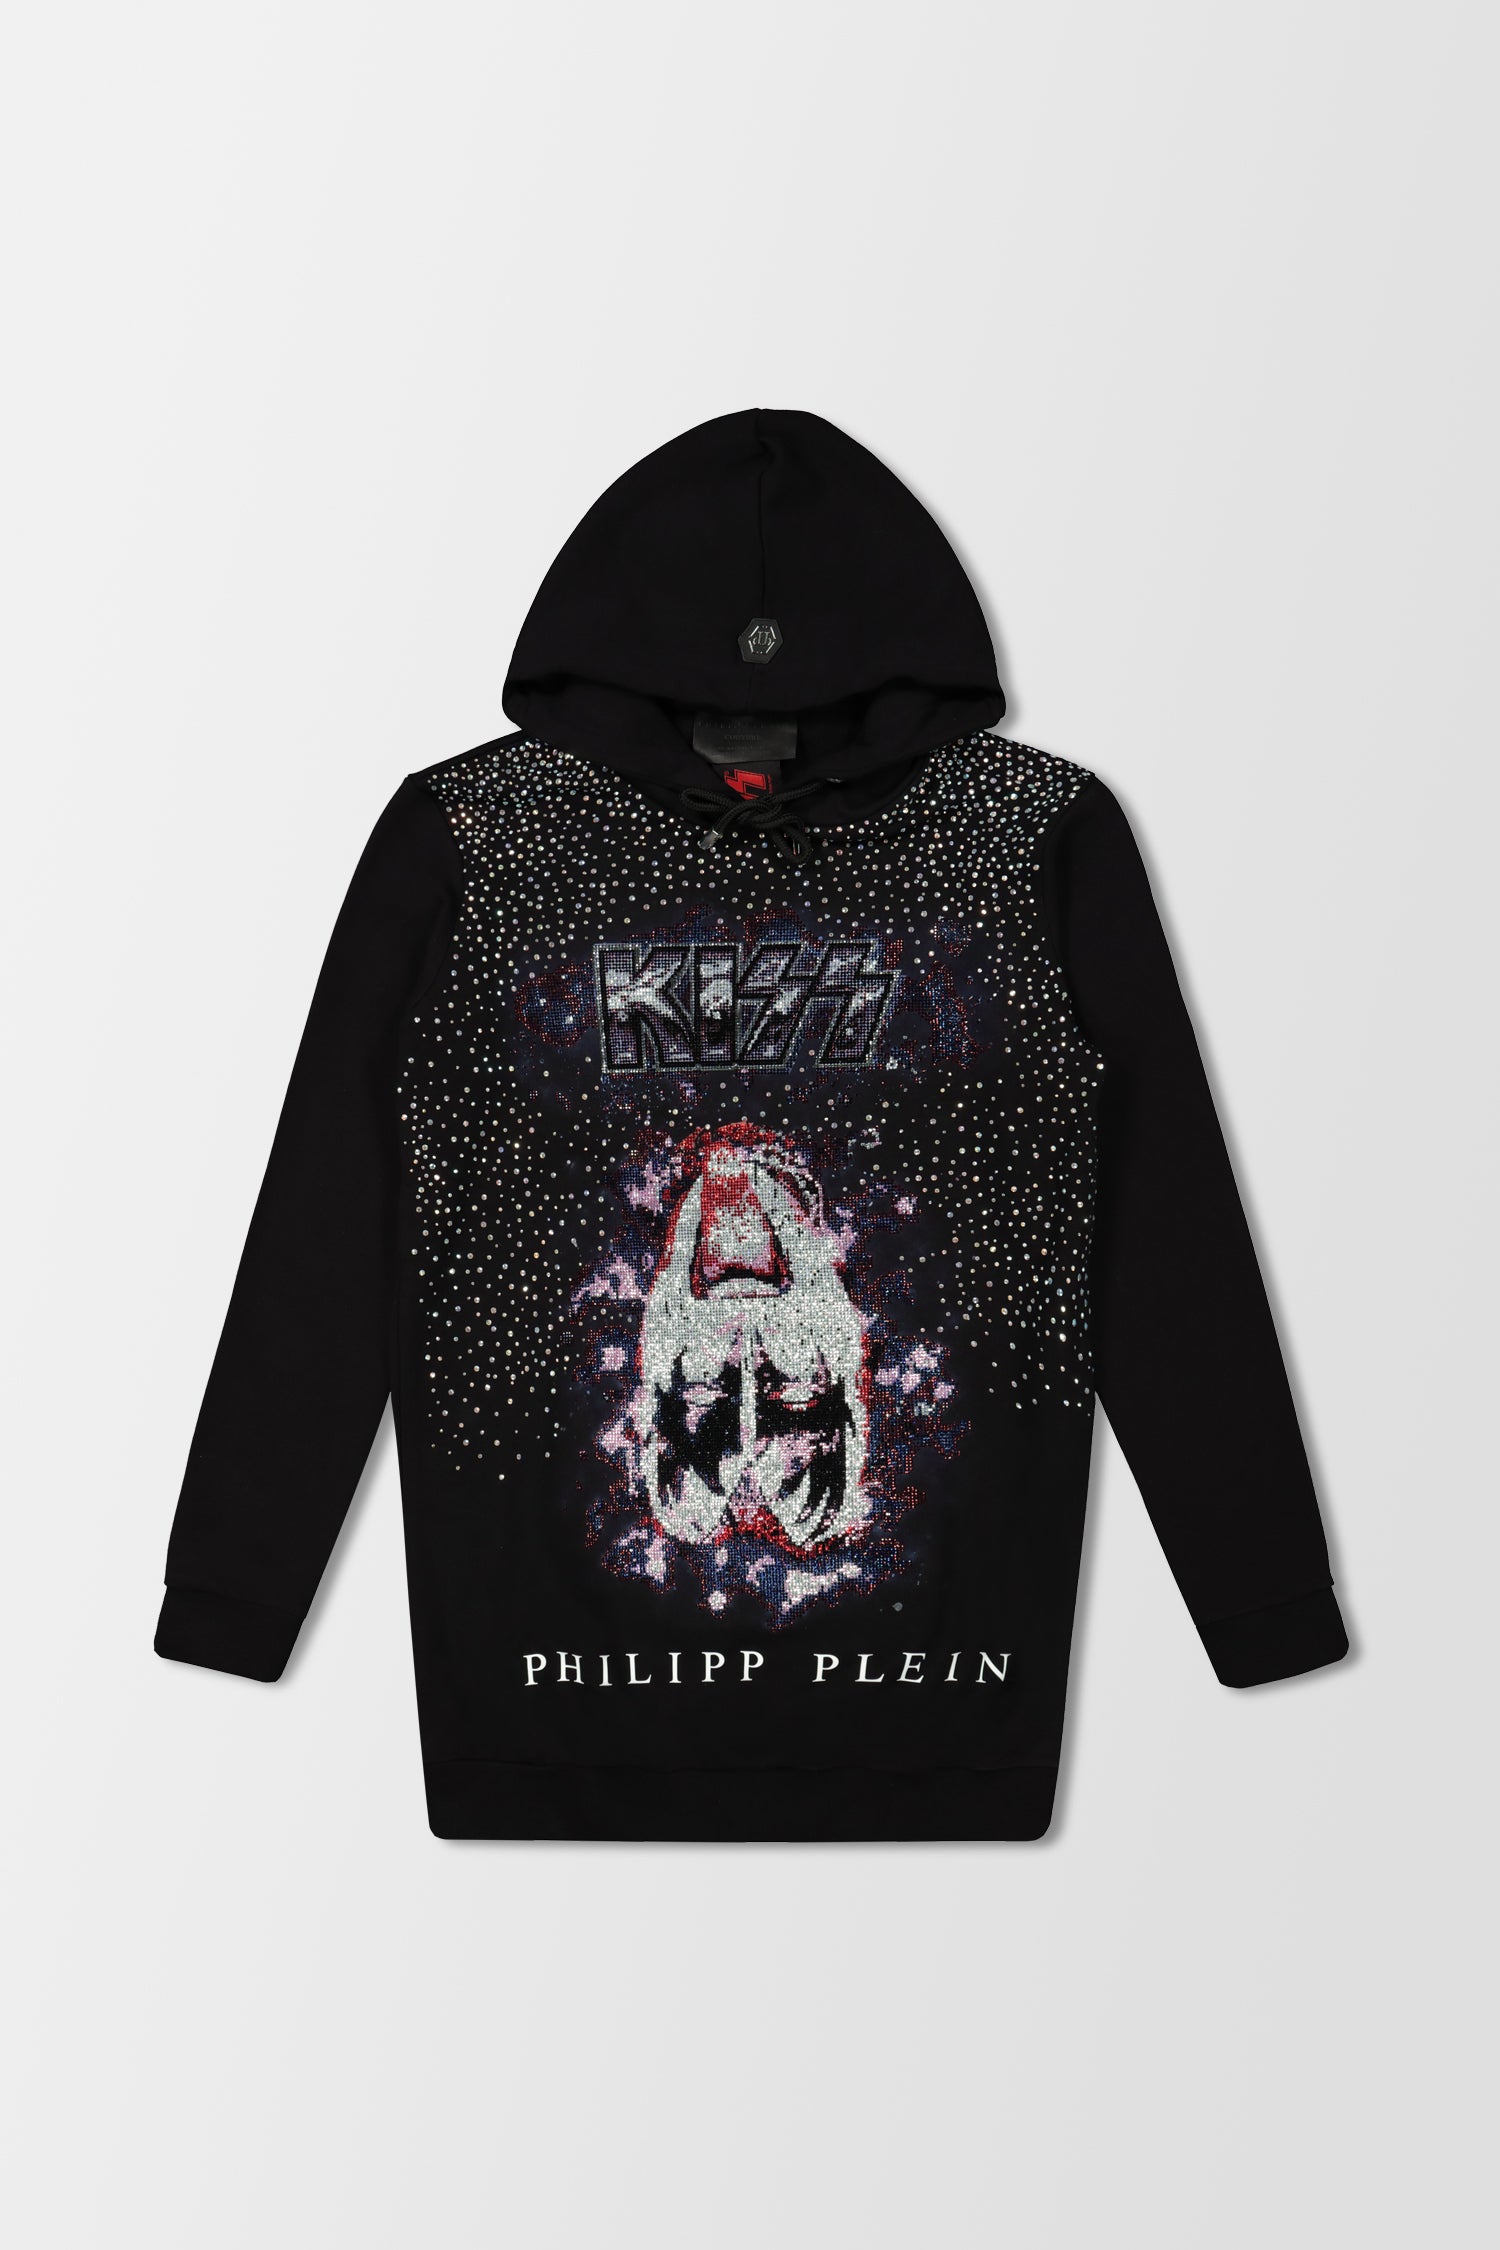 Philipp Plein Black Rock B Dress Hoodie